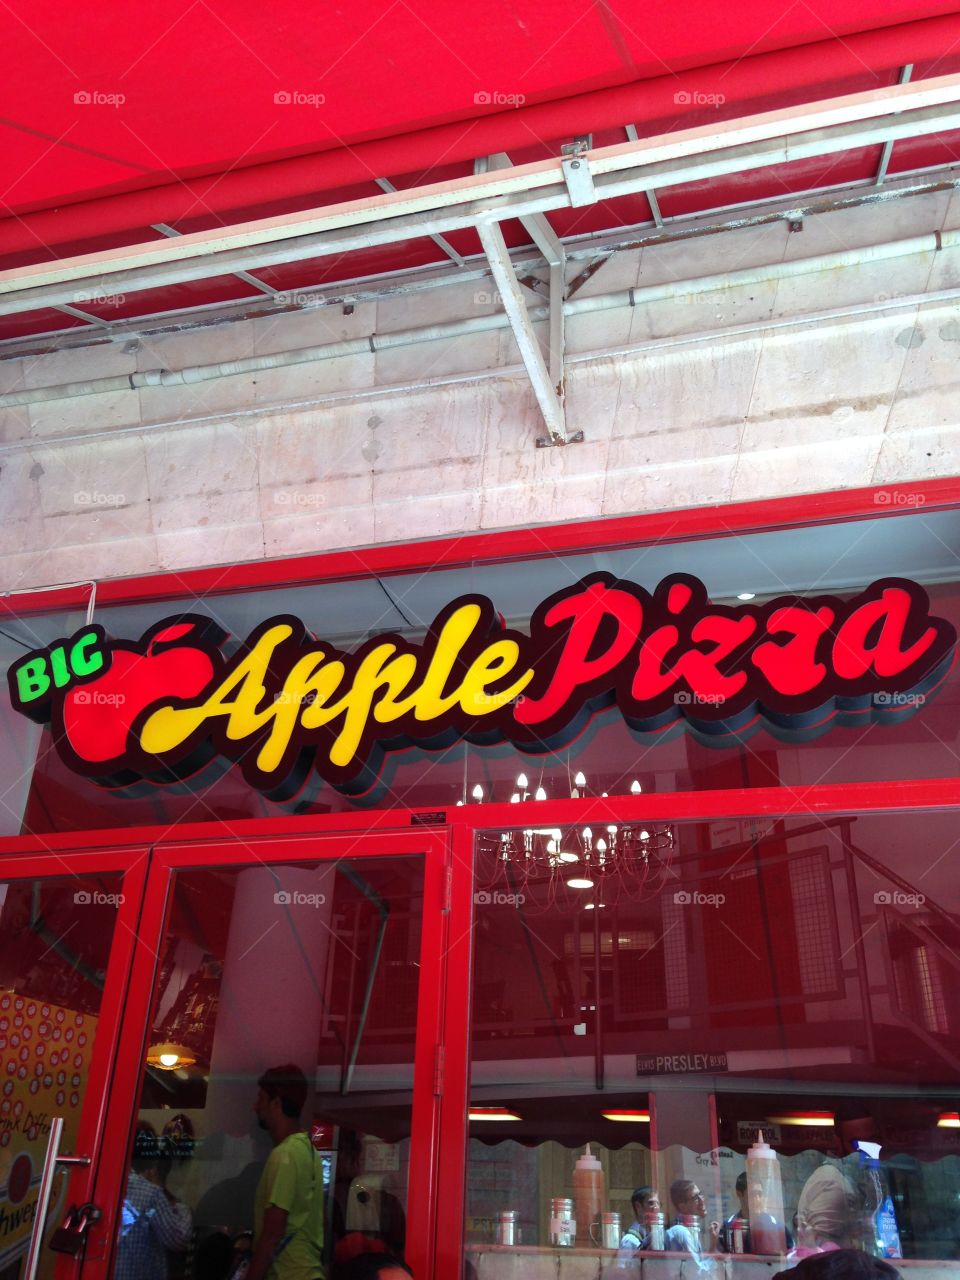 Jerusalem Big Apple Pizza